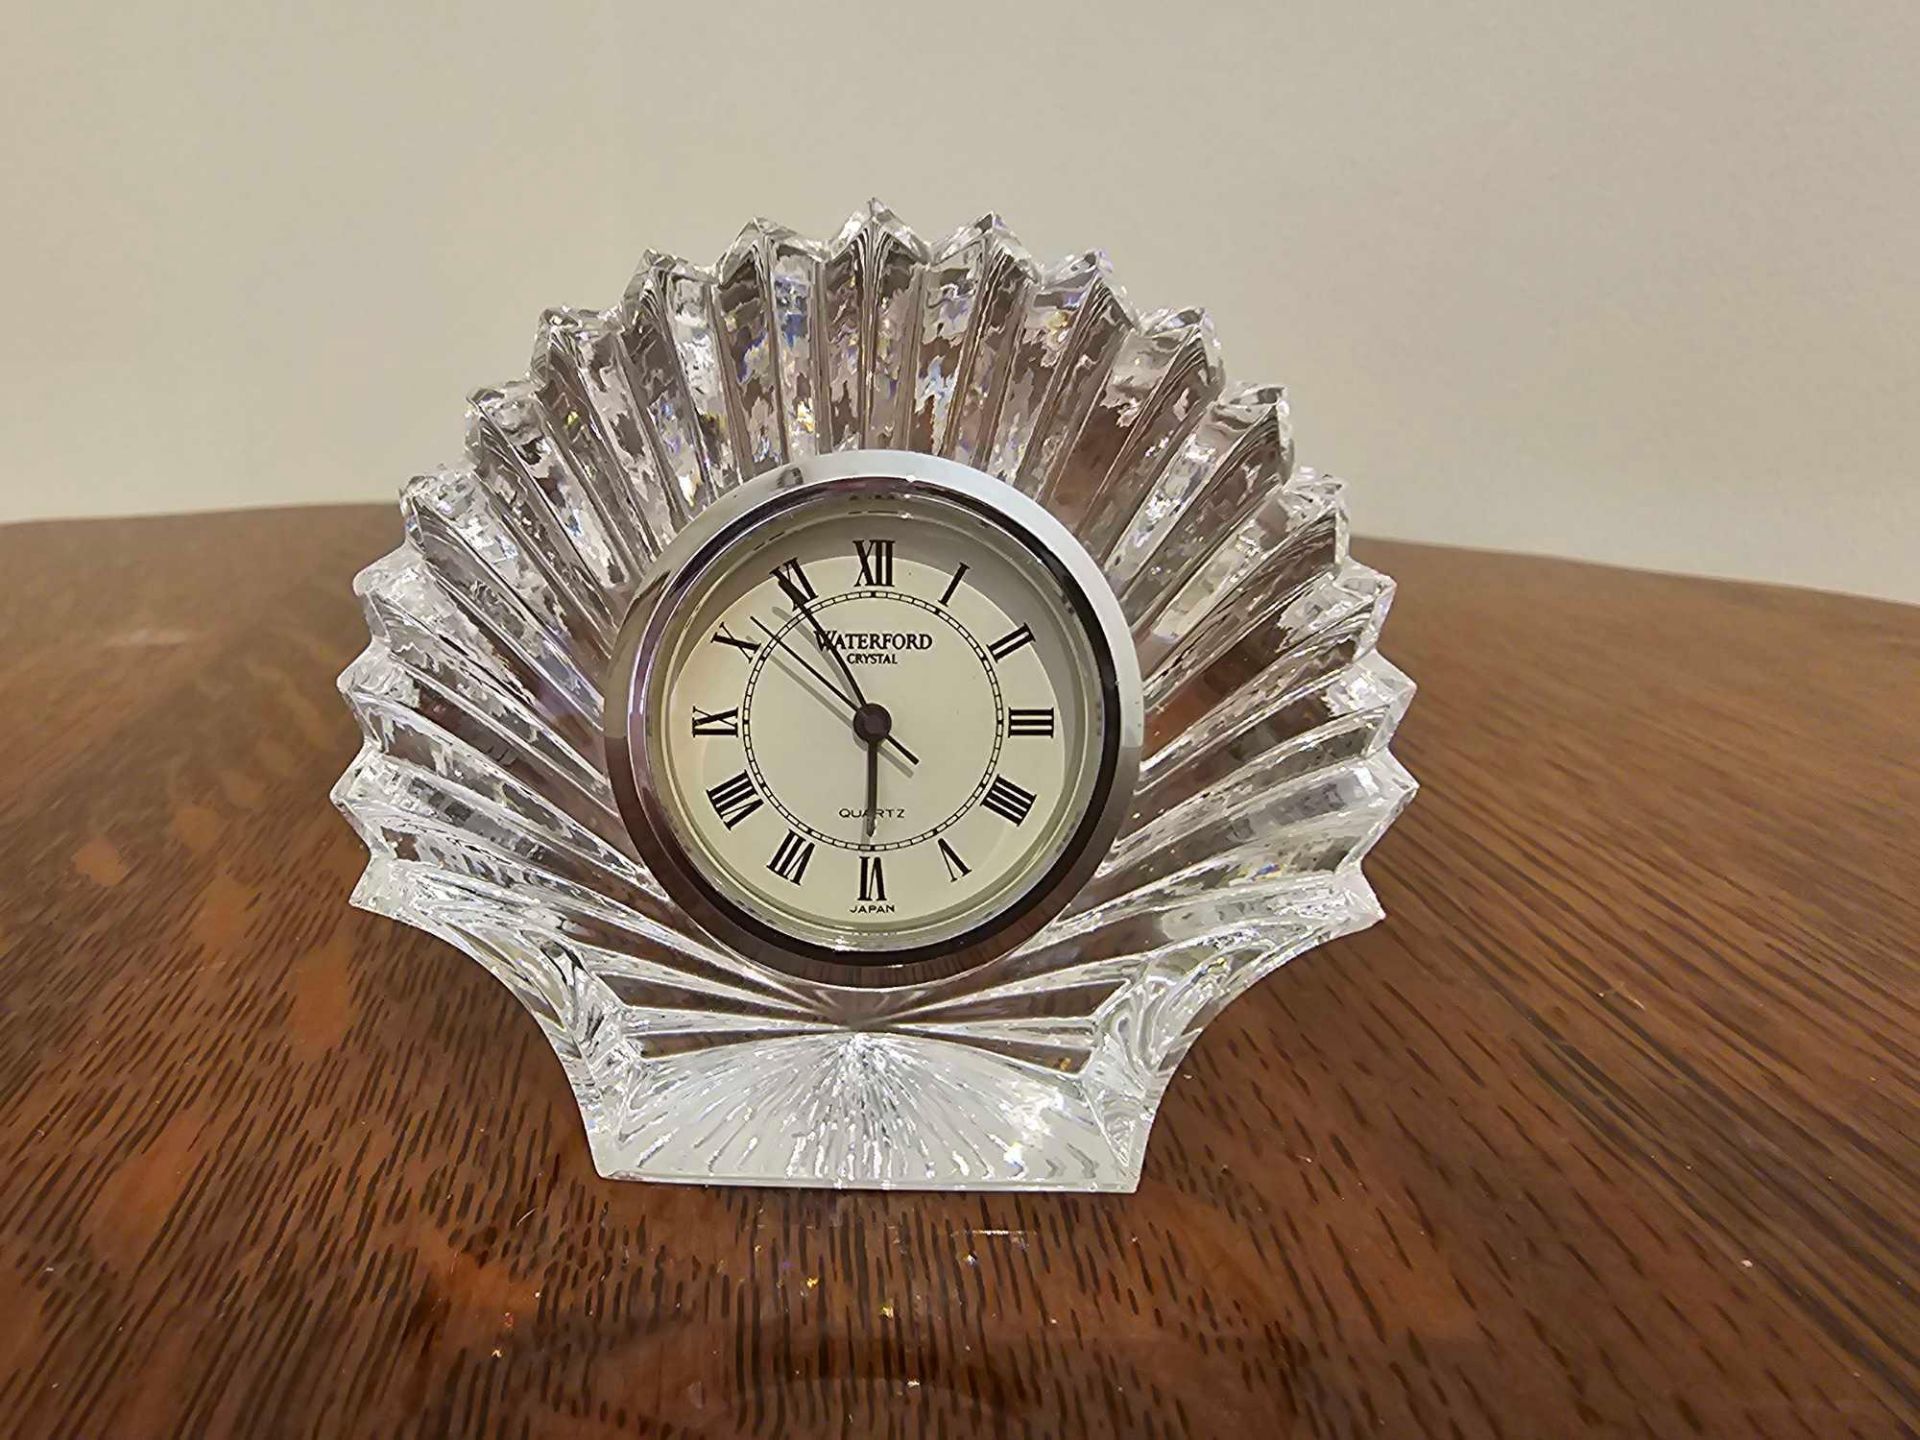 Waterford Crystal Lead Crystal Desk Clock 7 X 7.5cm